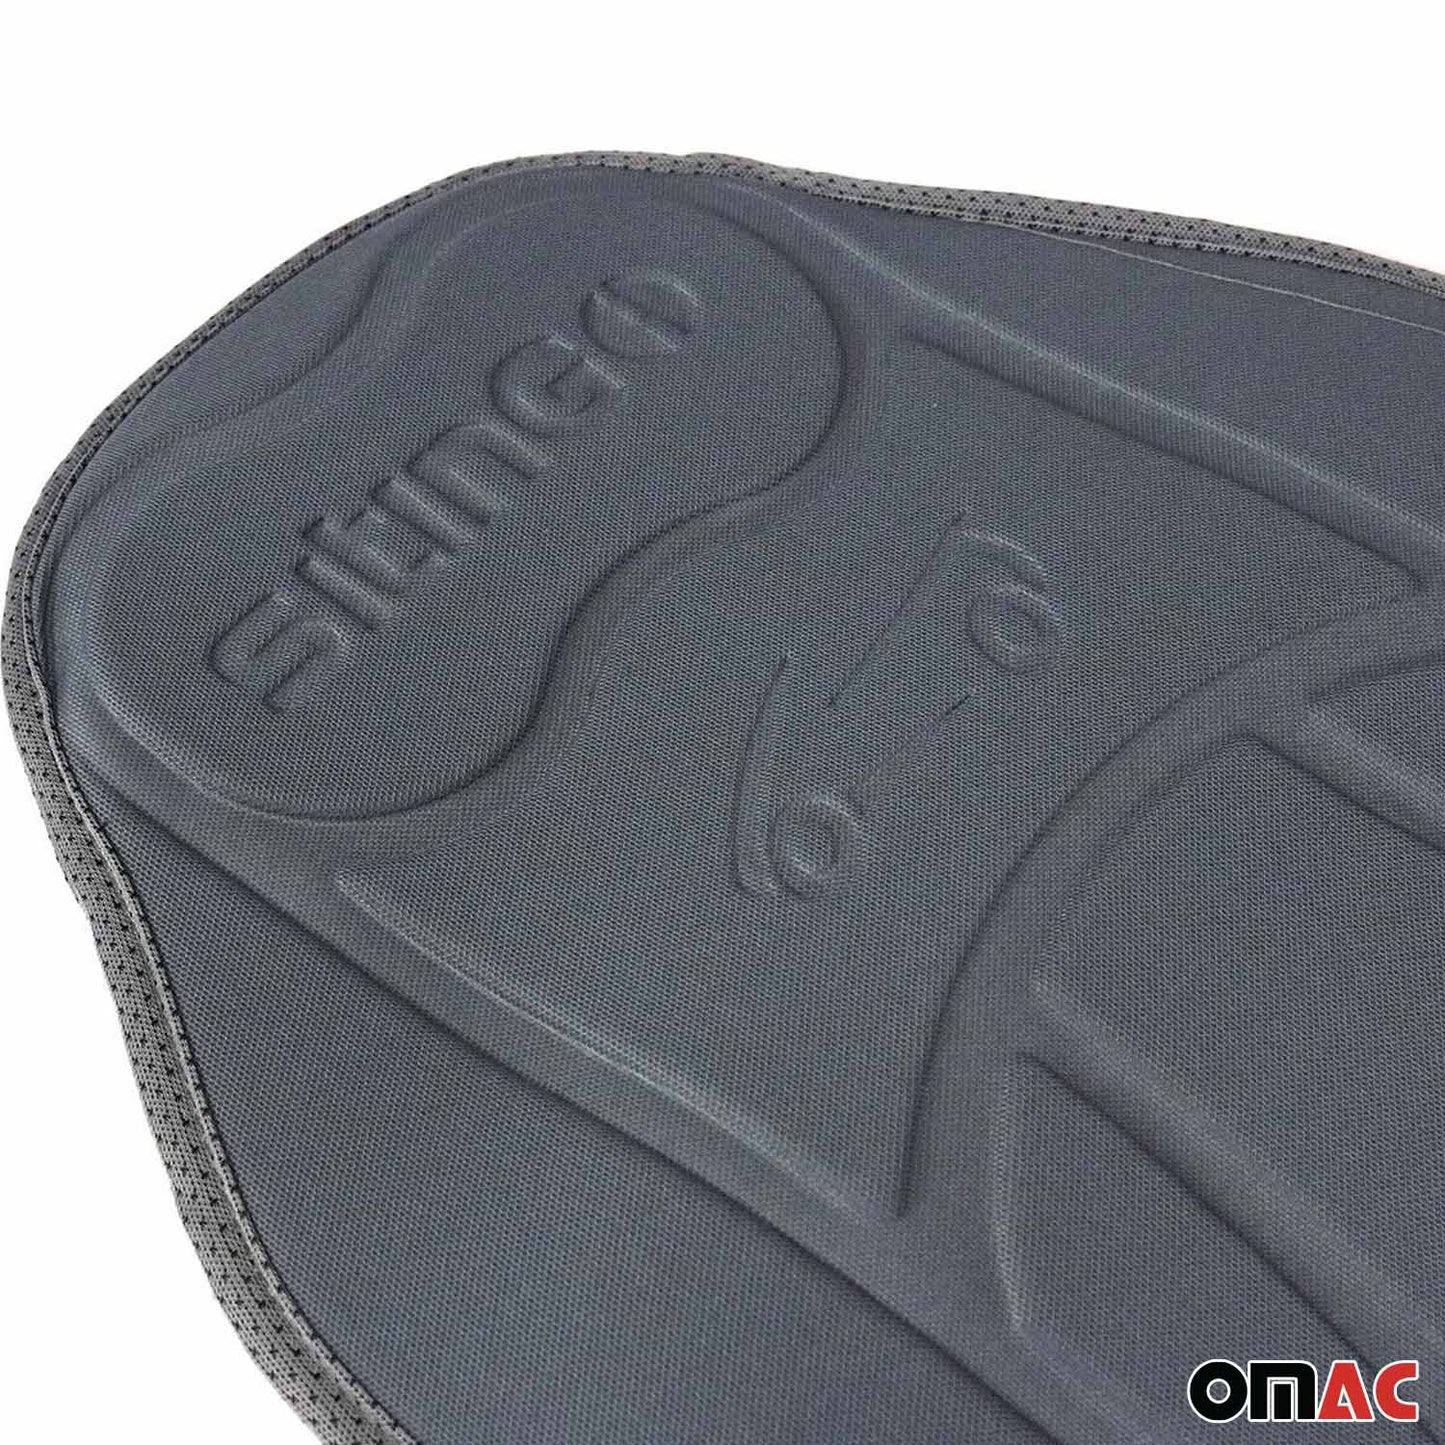 OMAC Car Seat Protector Cushion Cover Mat Pad Gray for Mercedes Fabric Gray 2Pcs U022398